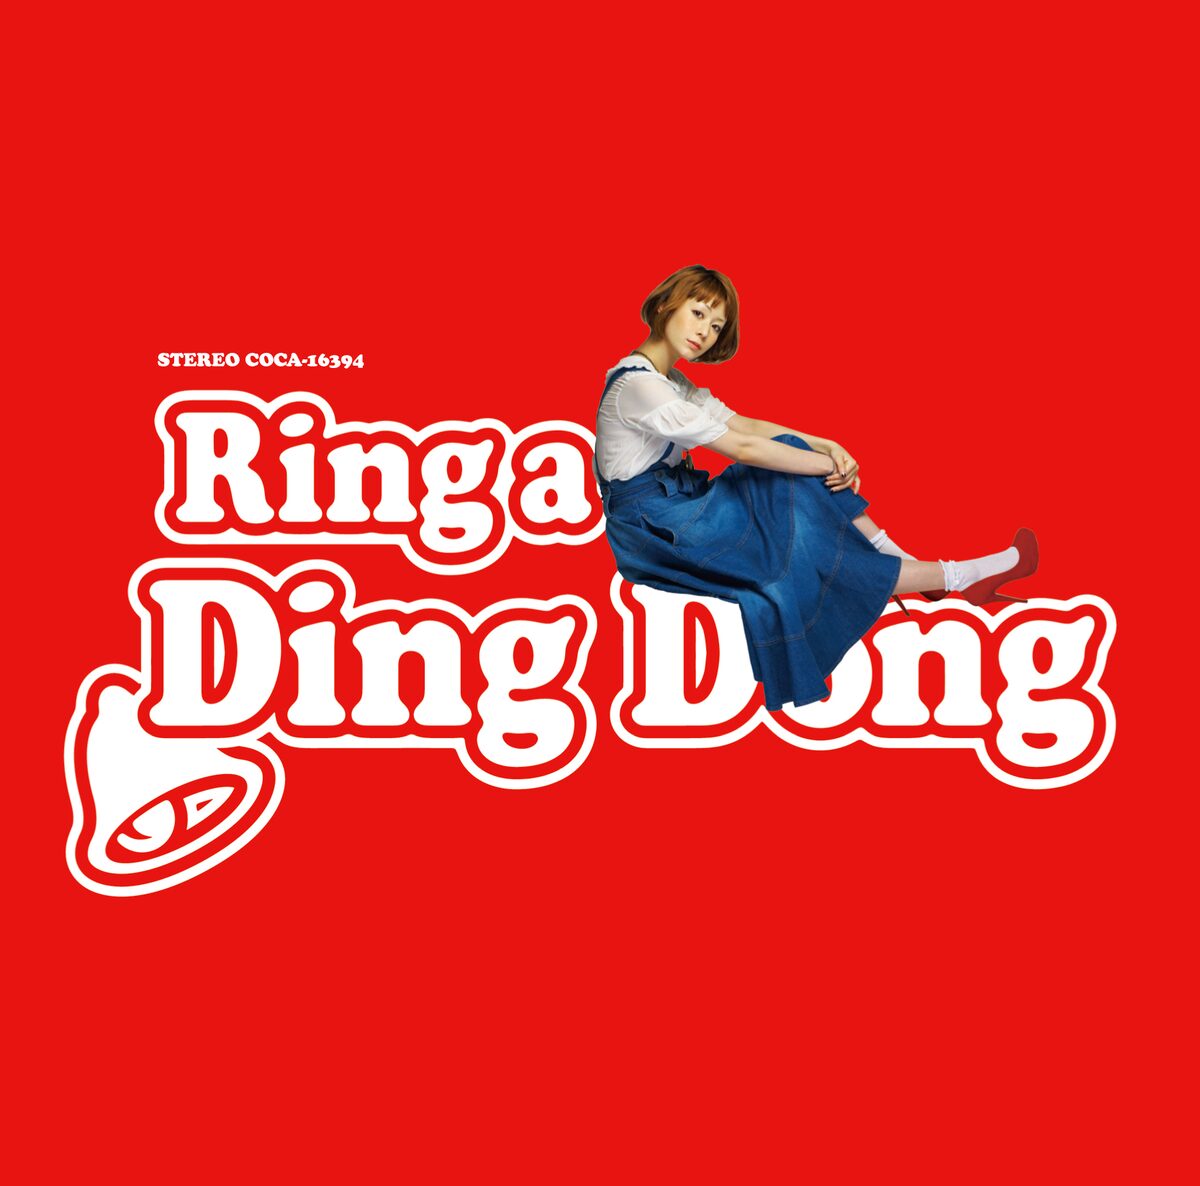 Dr Dre - Ring Ding Dong (Keep their heads ringin') LYRICS - Vidéo  Dailymotion